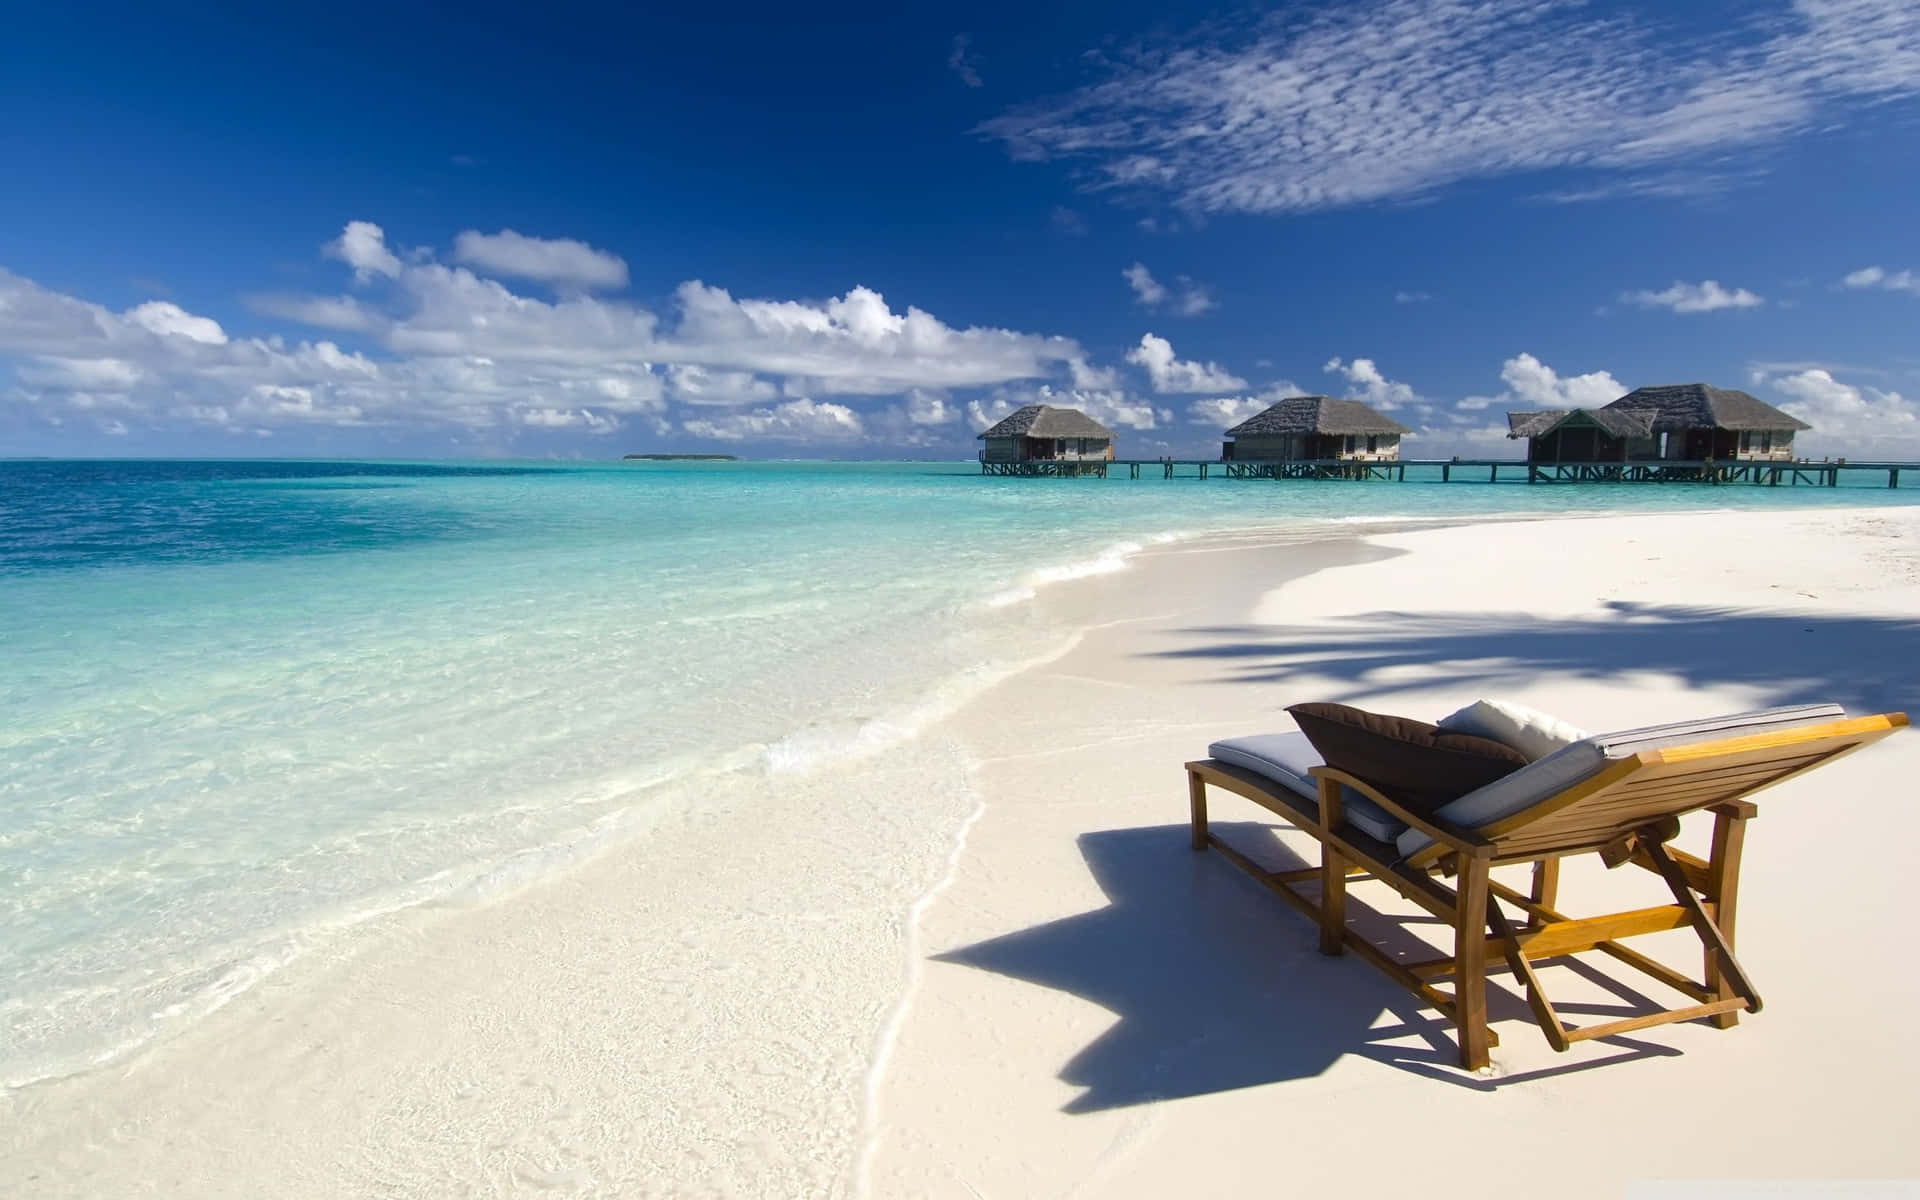 Take a break. Explore this beautiful tropical island.